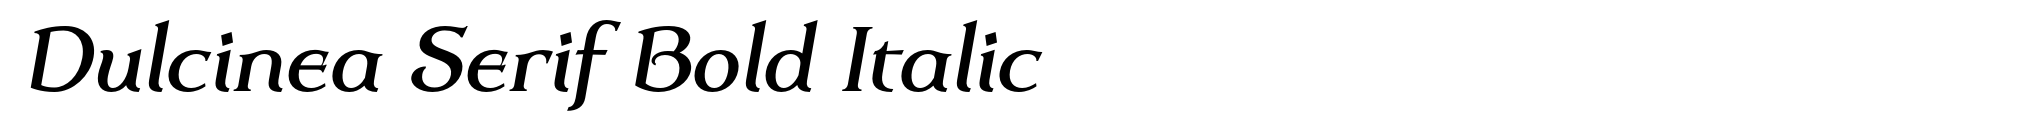 Dulcinea Serif Bold Italic image